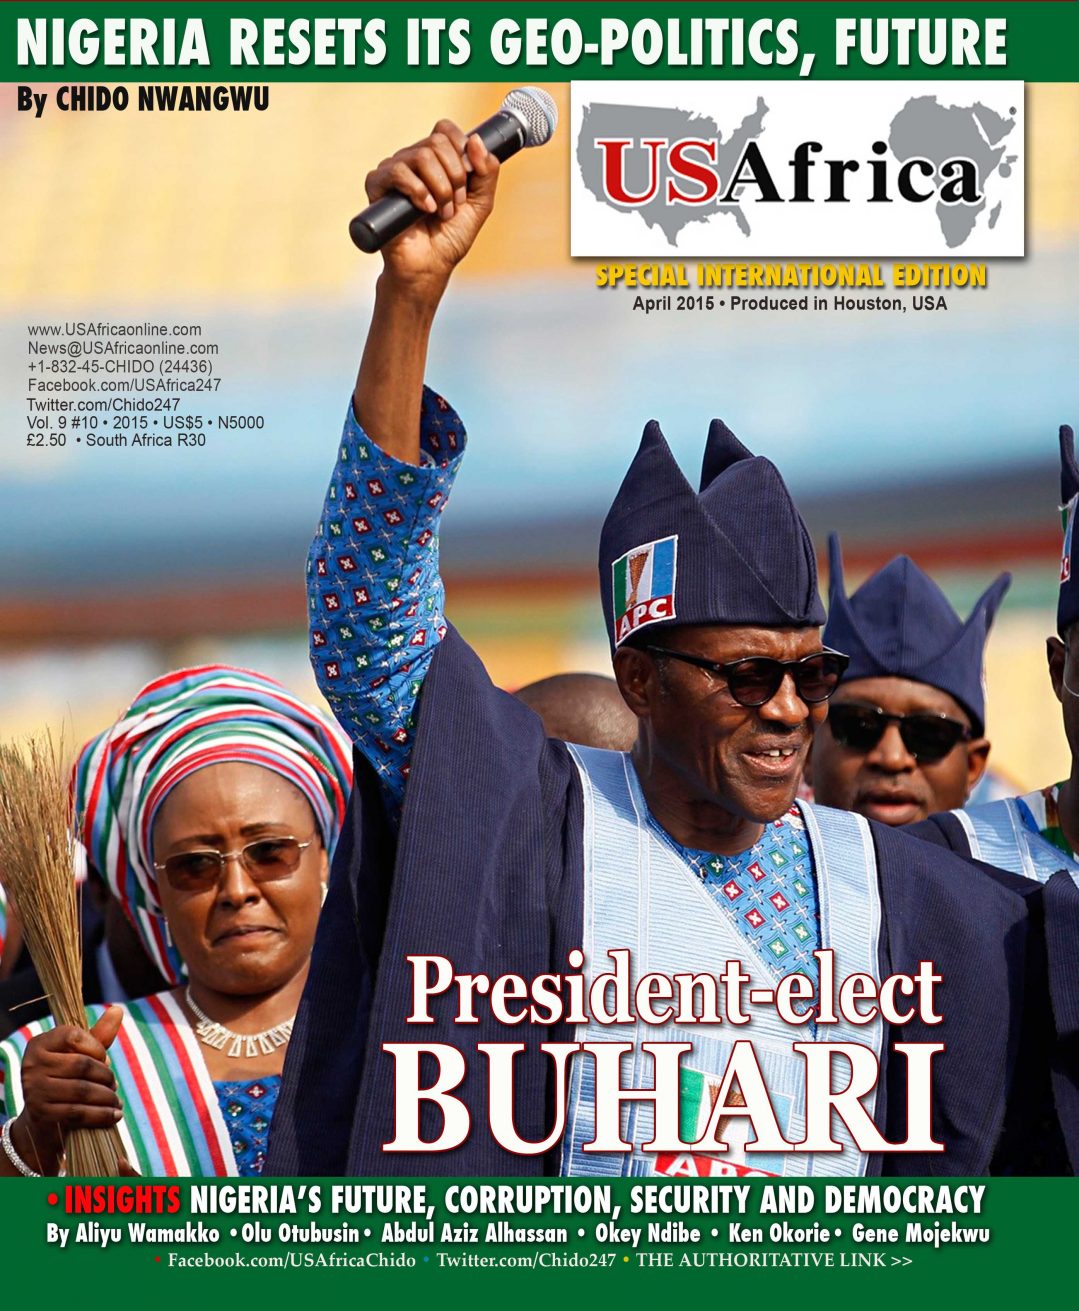 USAfrica: With President-elect #Buhari, Nigeria resets its geo-politics, future....